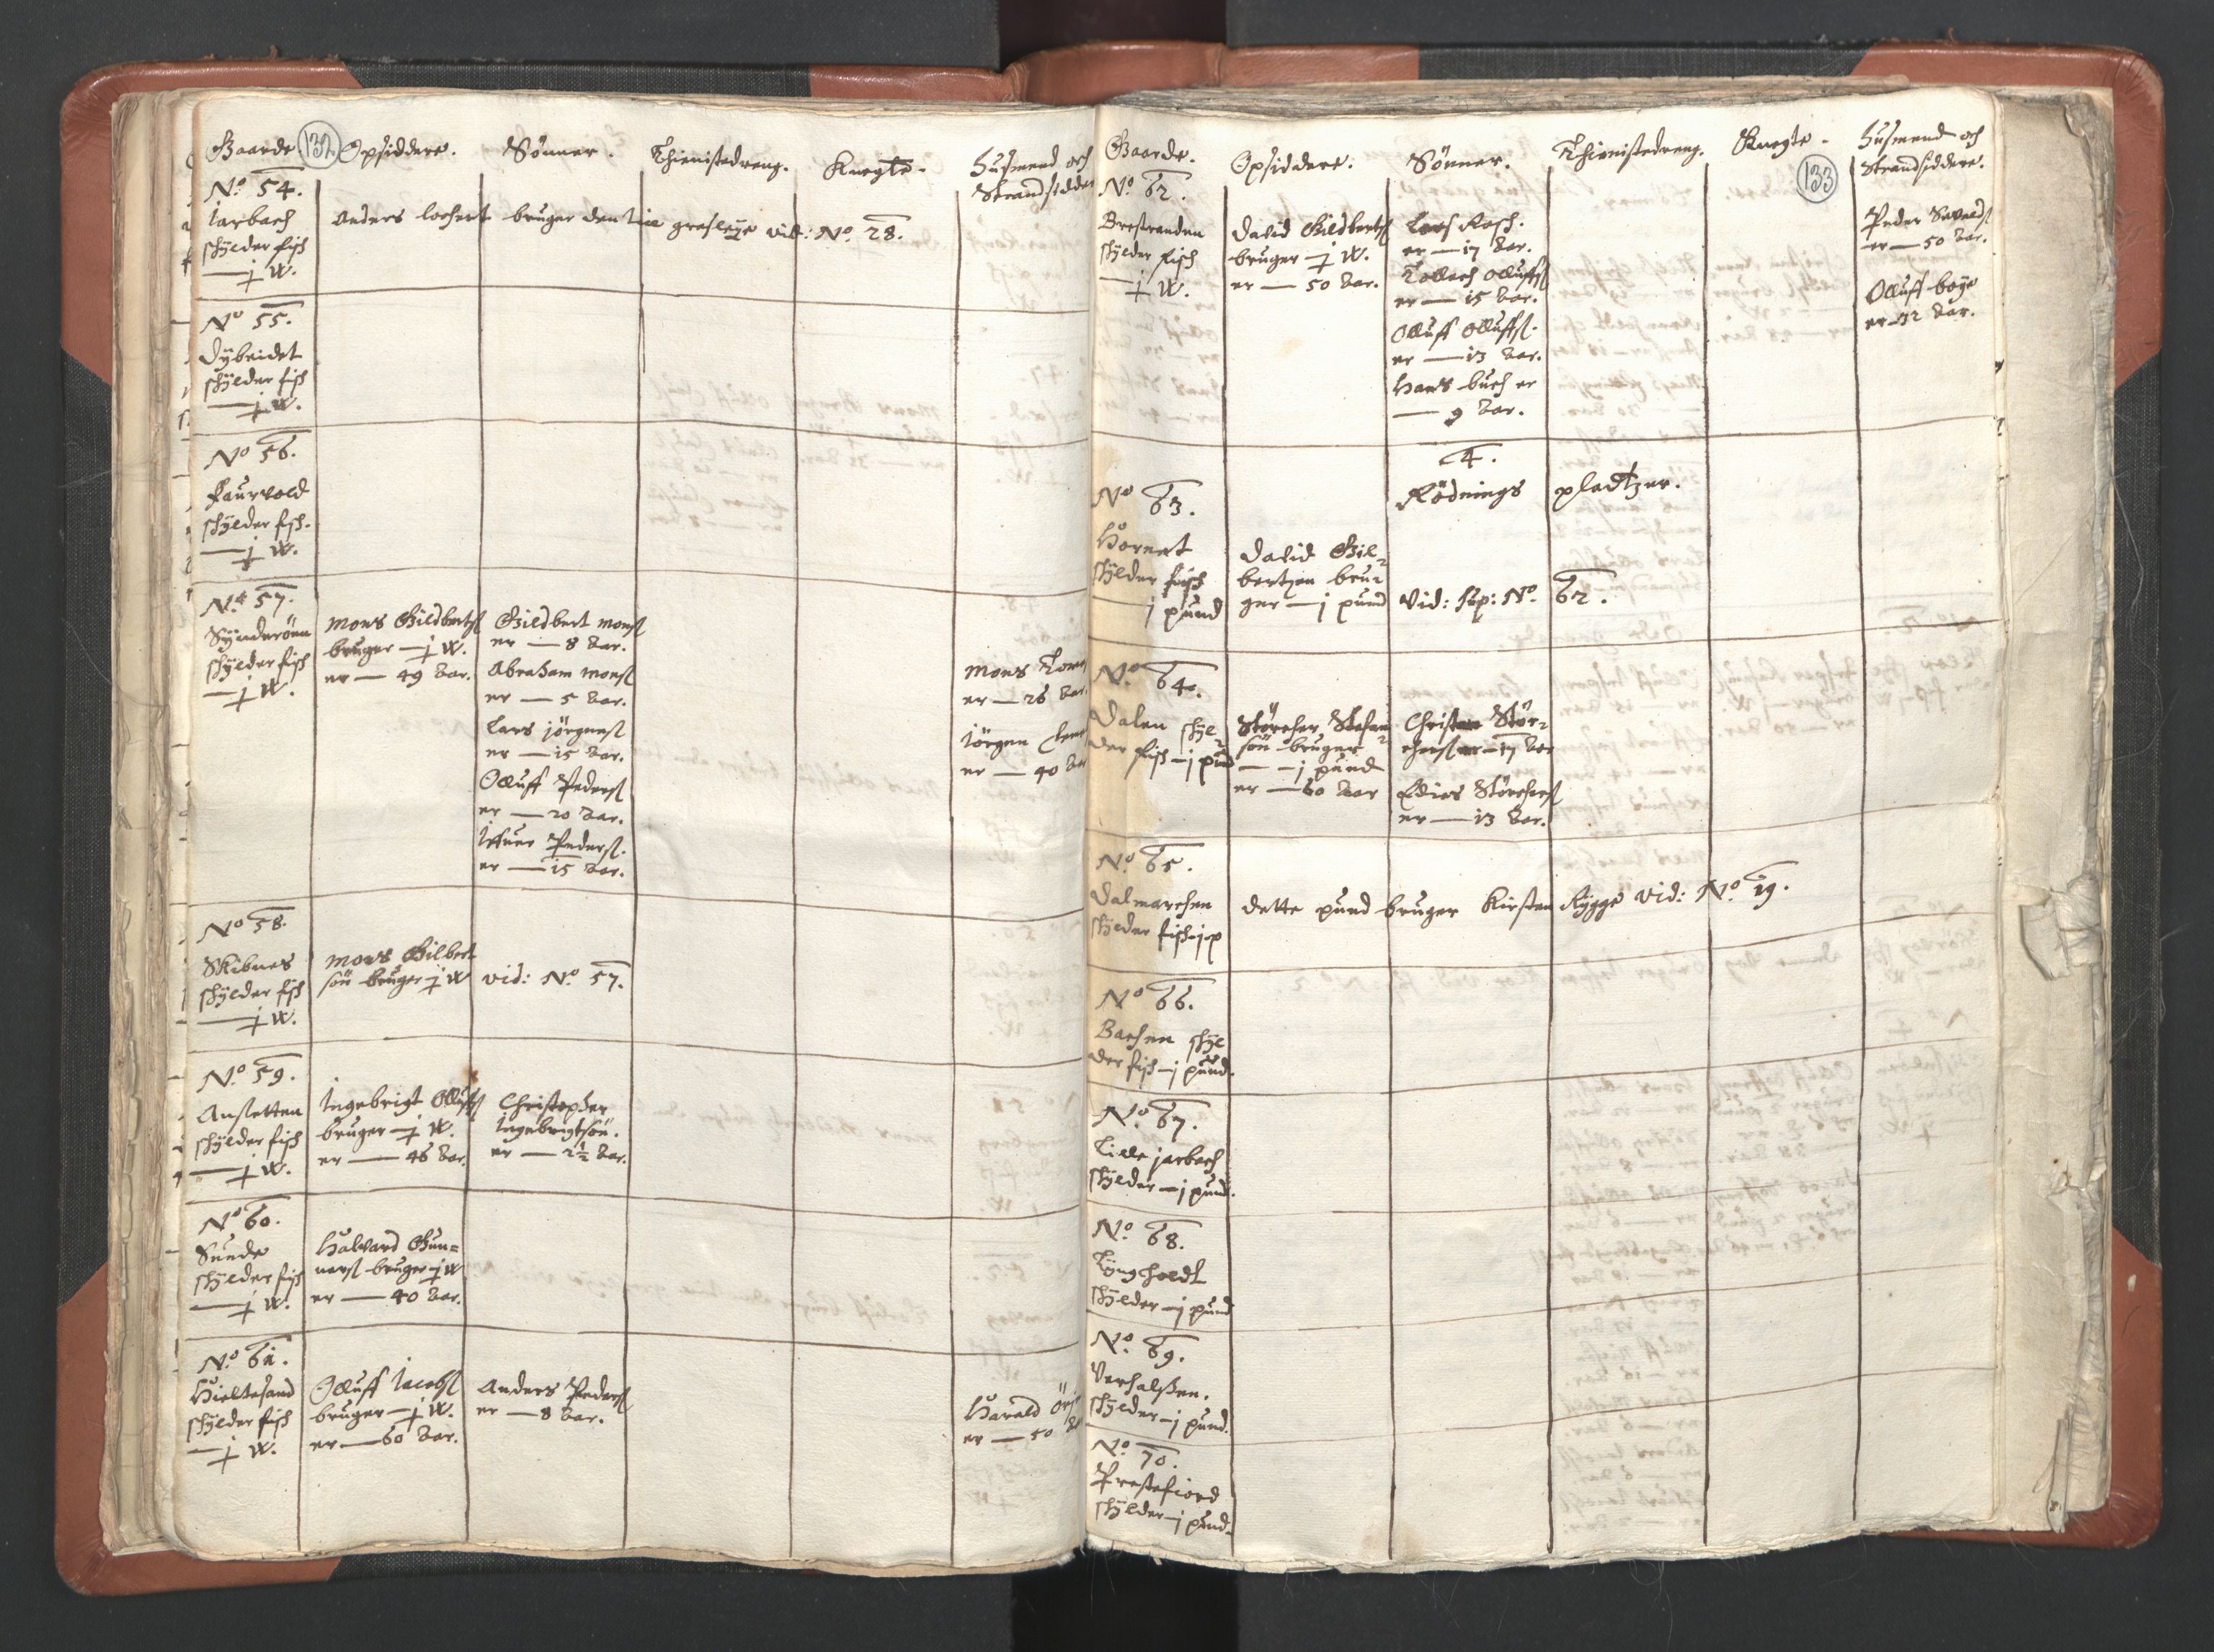 RA, Vicar's Census 1664-1666, no. 36: Lofoten and Vesterålen deanery, Senja deanery and Troms deanery, 1664-1666, p. 132-133